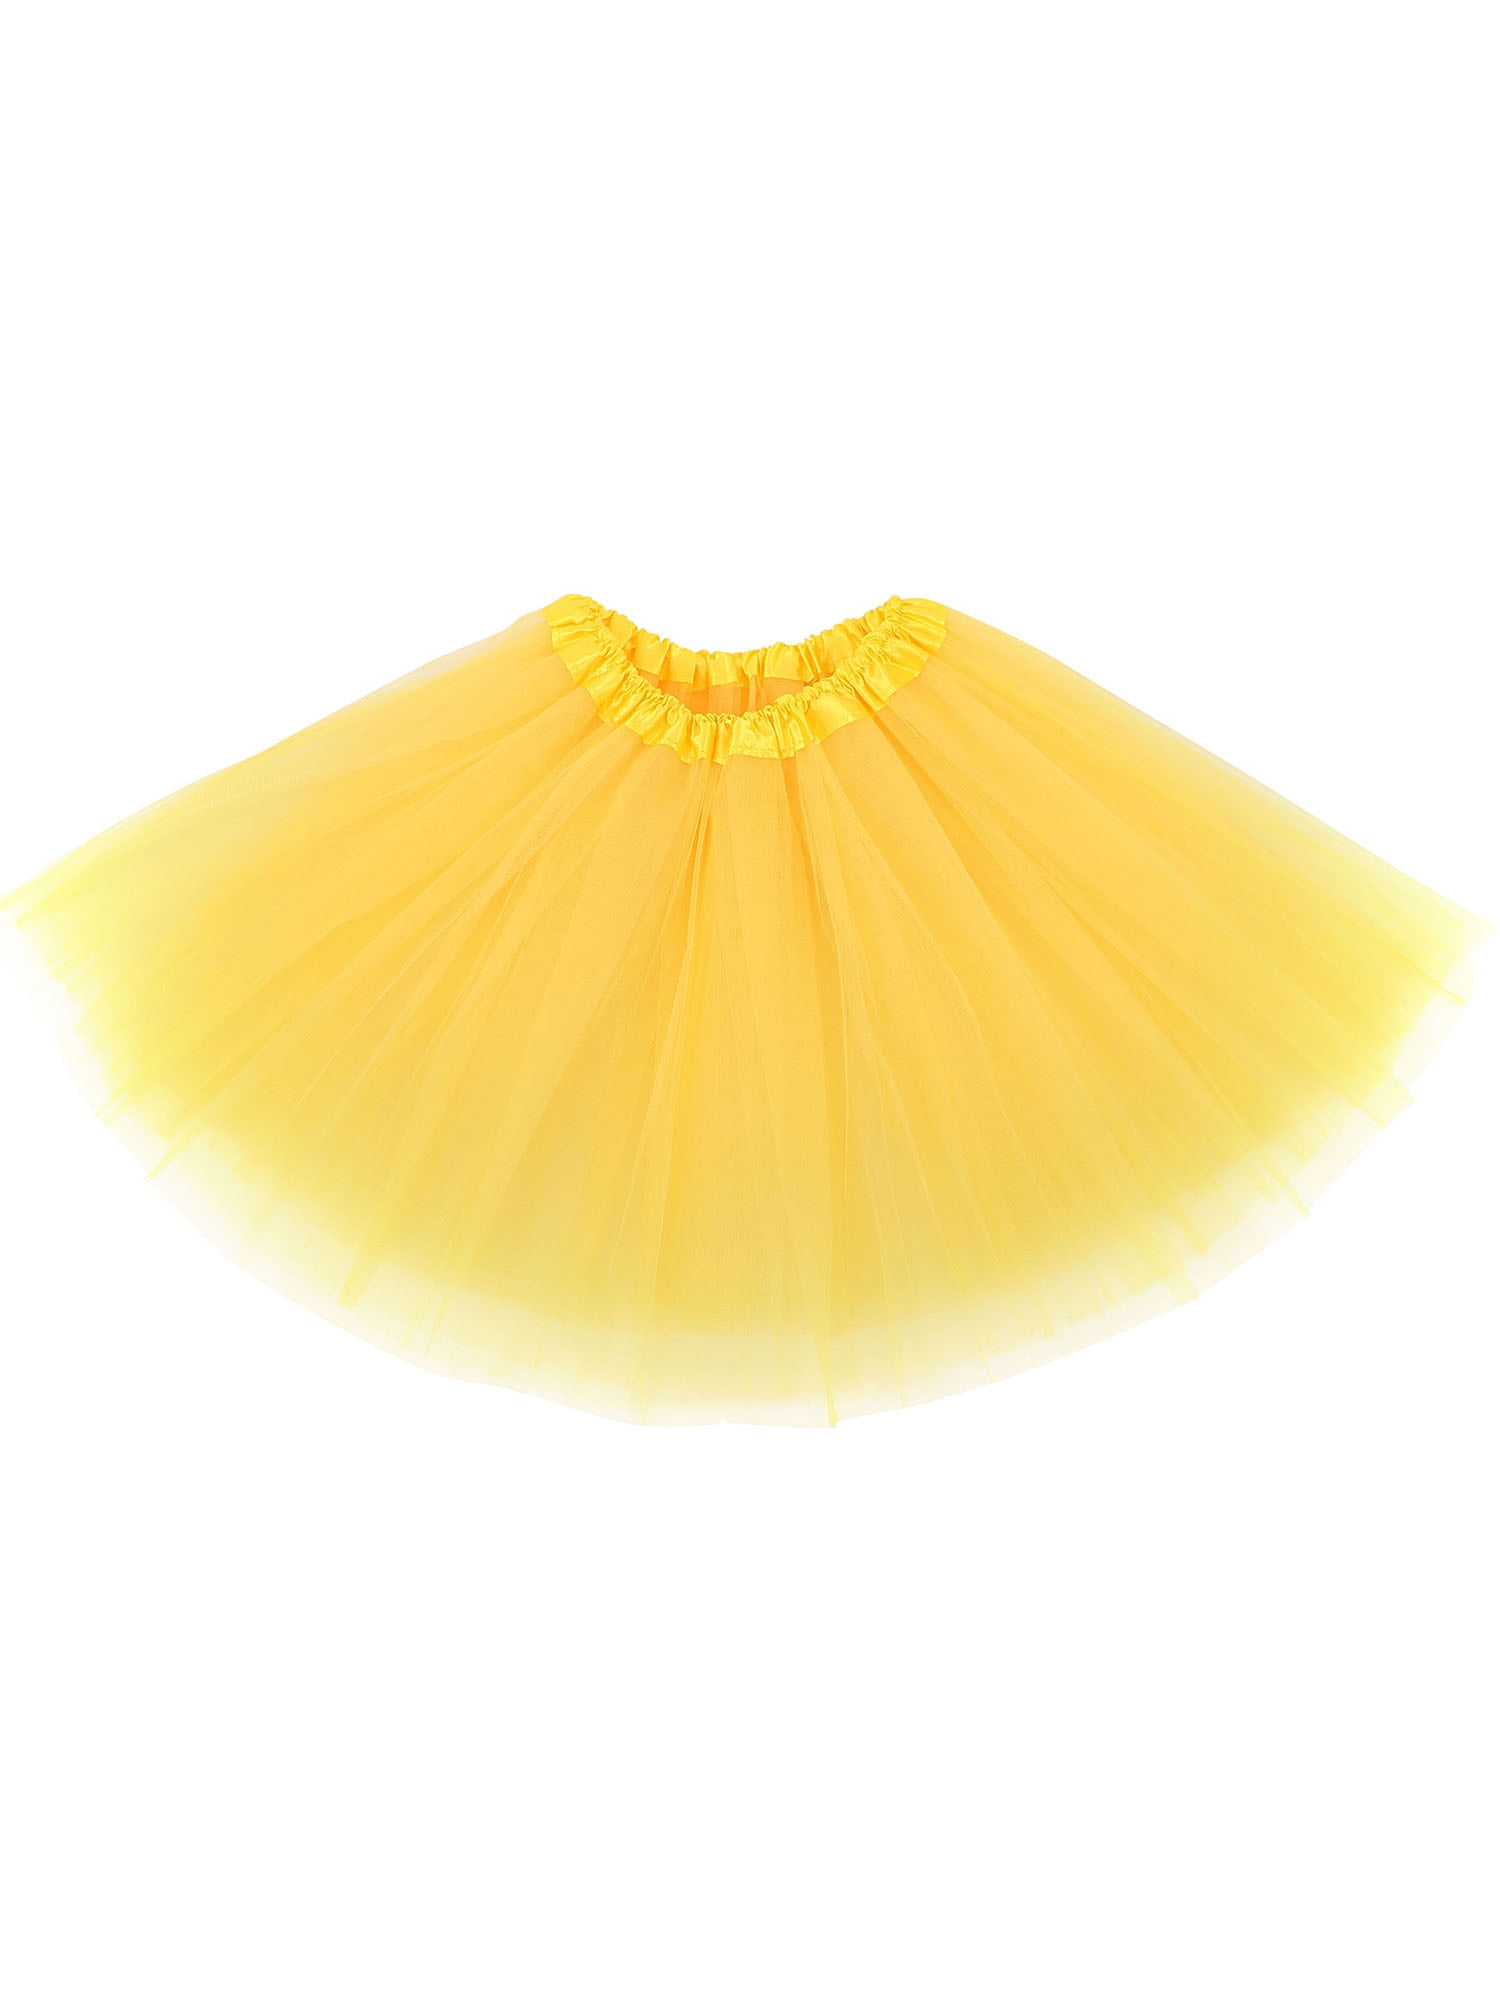 Simplicity Women's Classic Elastic, 3-Layered Tulle Tutu Skirt, Yellow ...